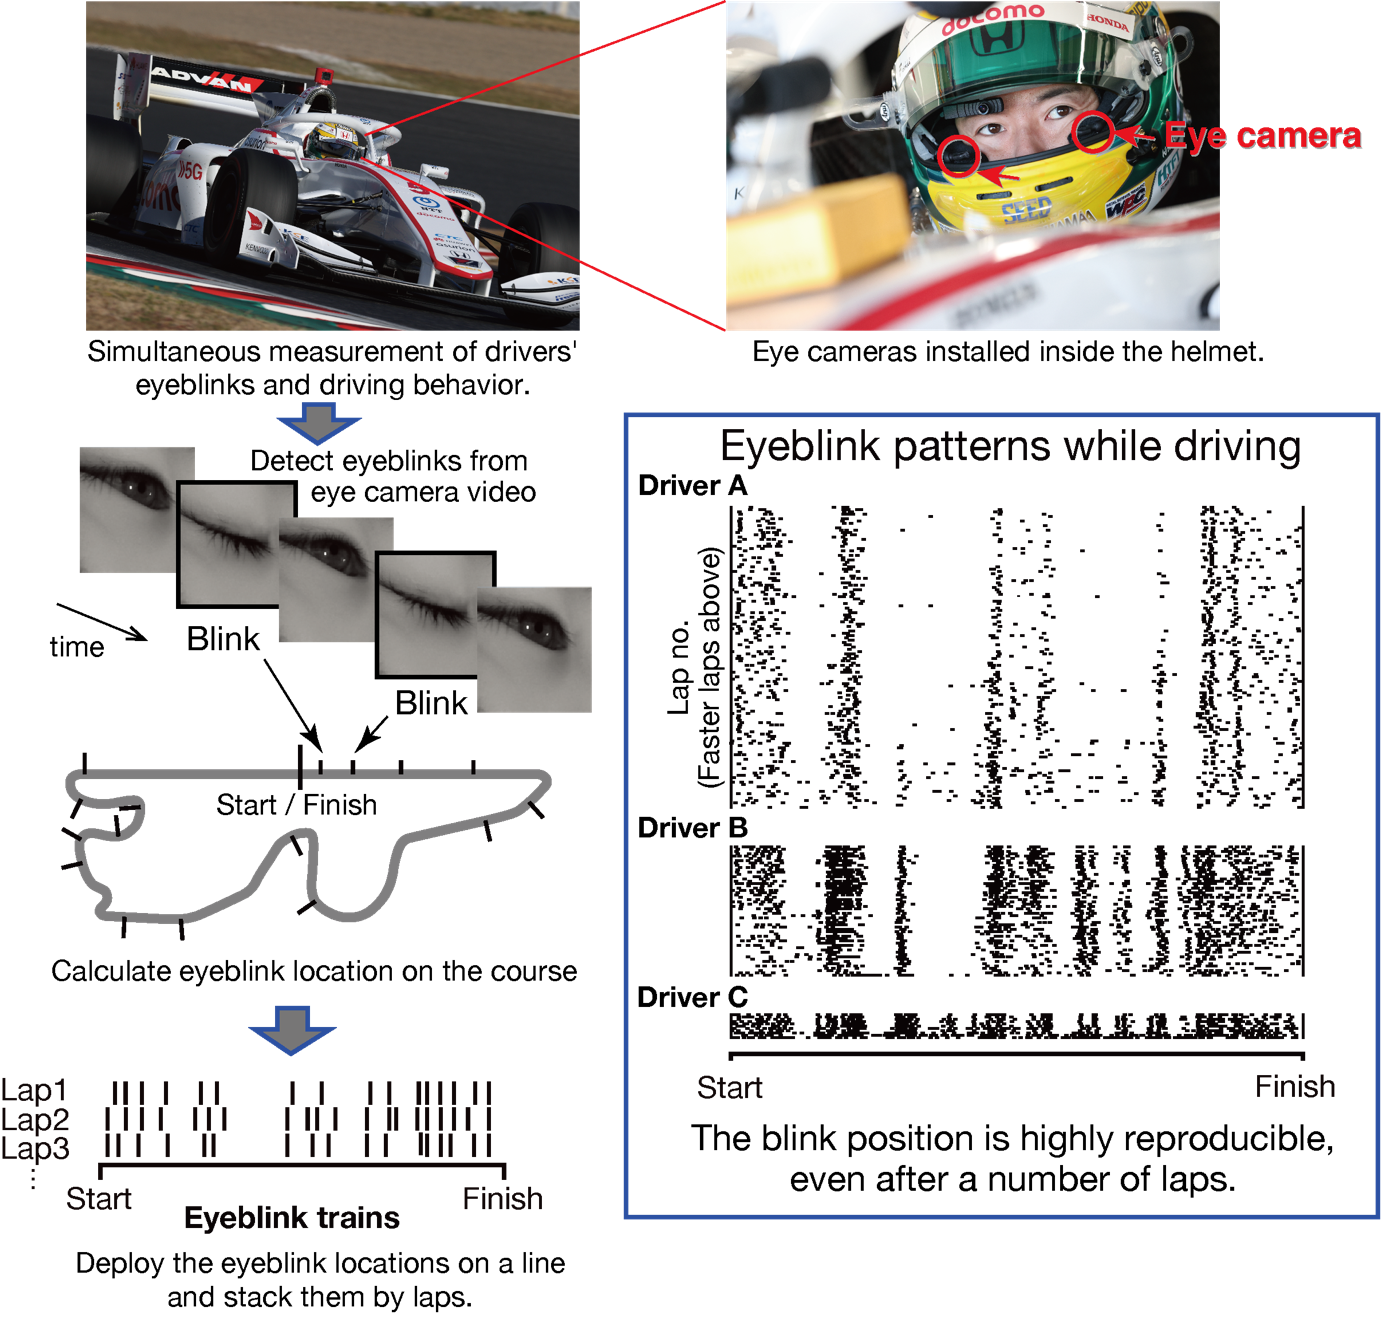 Figure 1. Eyeblink patterns during Formula car driving.